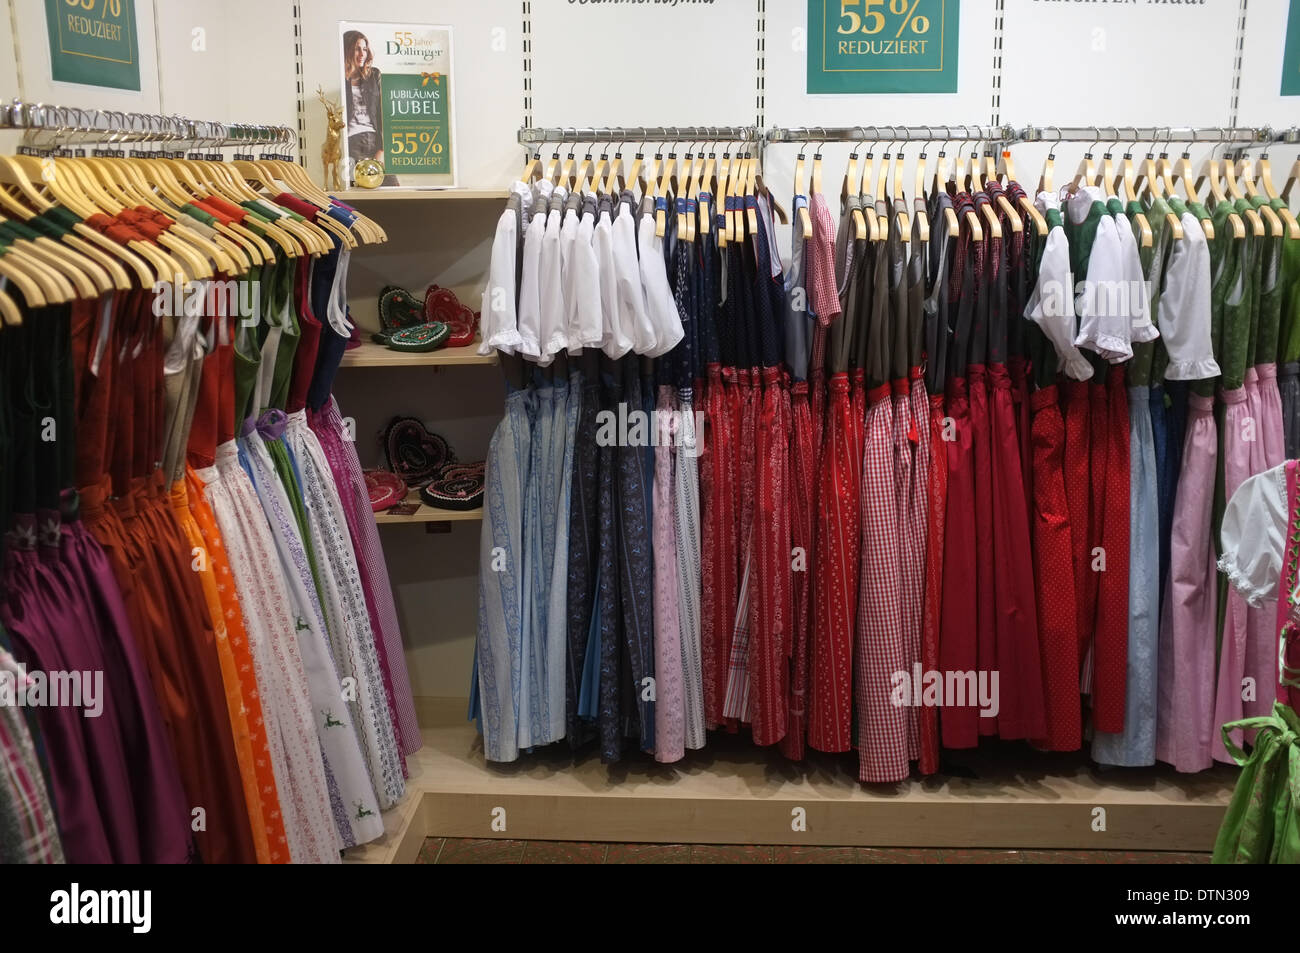 Shop for Dirndl dresses - female costume in Bavaria - 4 January 2014. Stock Photo